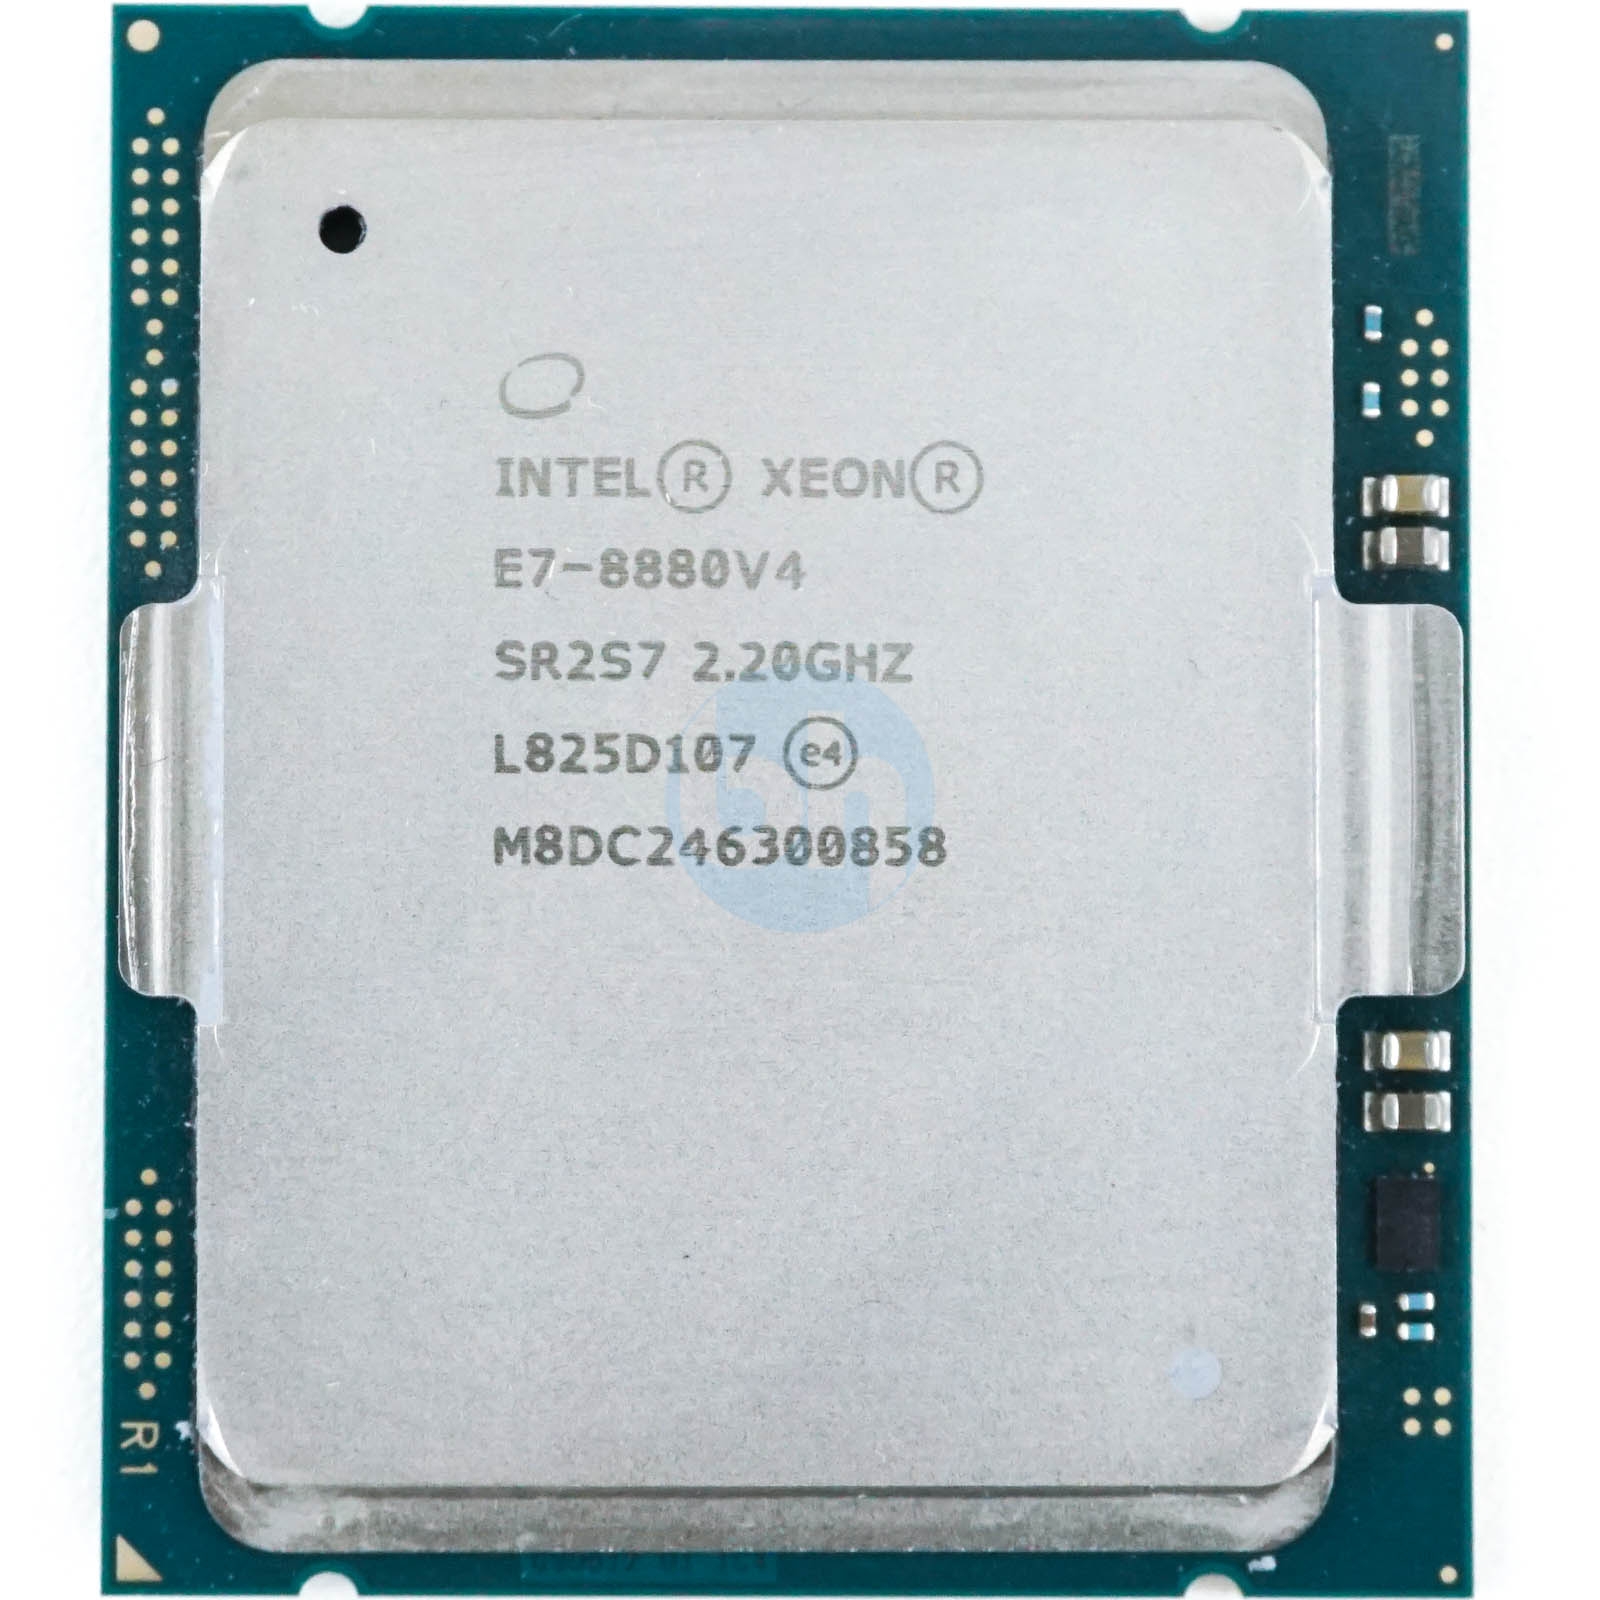 Intel Xeon E7-8880 V4 SR2S7 2.20GHz 22-Core LGA2011 150W 55MB Server CPU